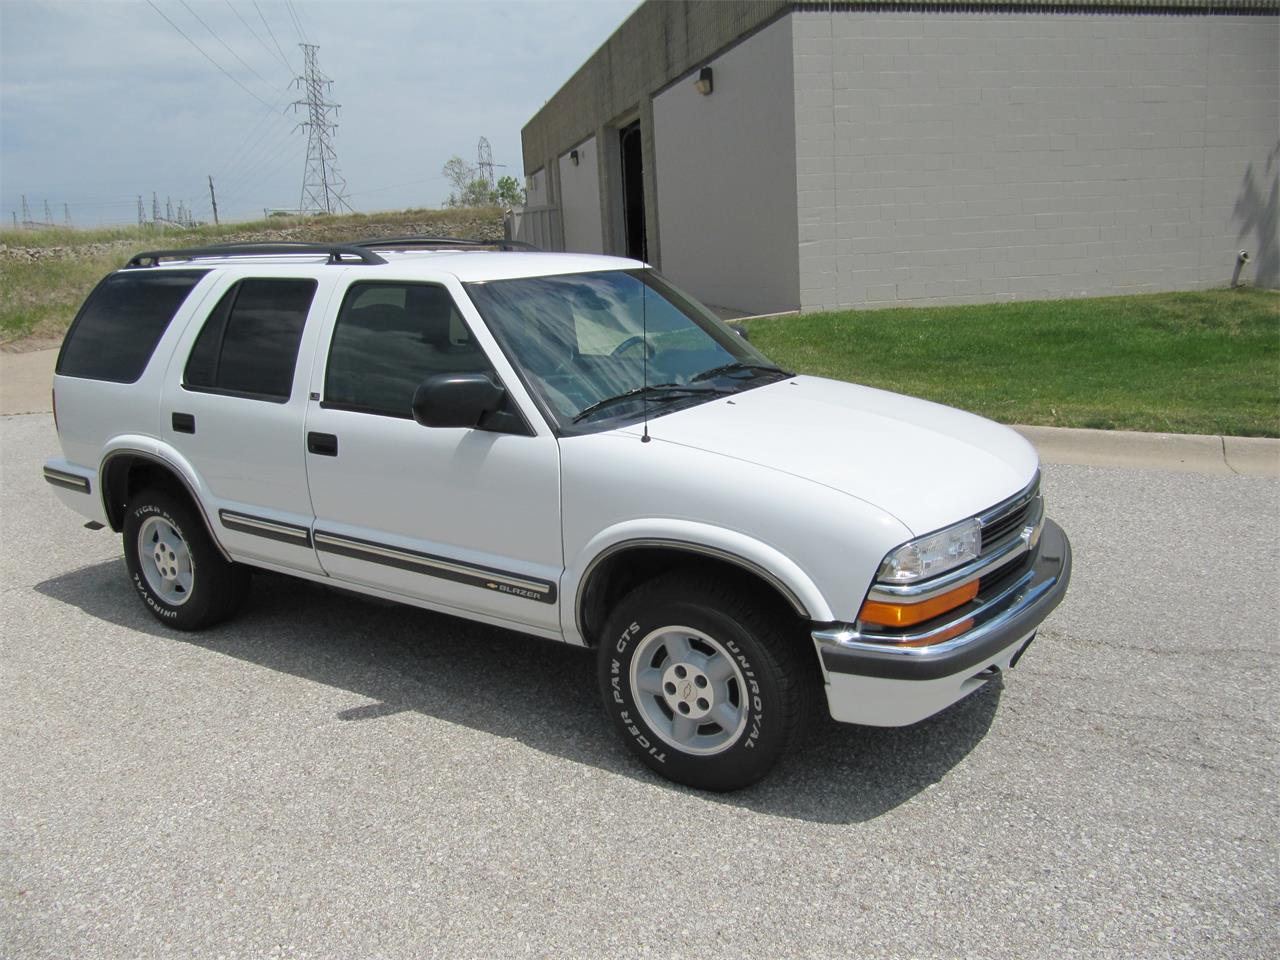 1999 Chevrolet Blazer for Sale (with Photos) - CARFAX